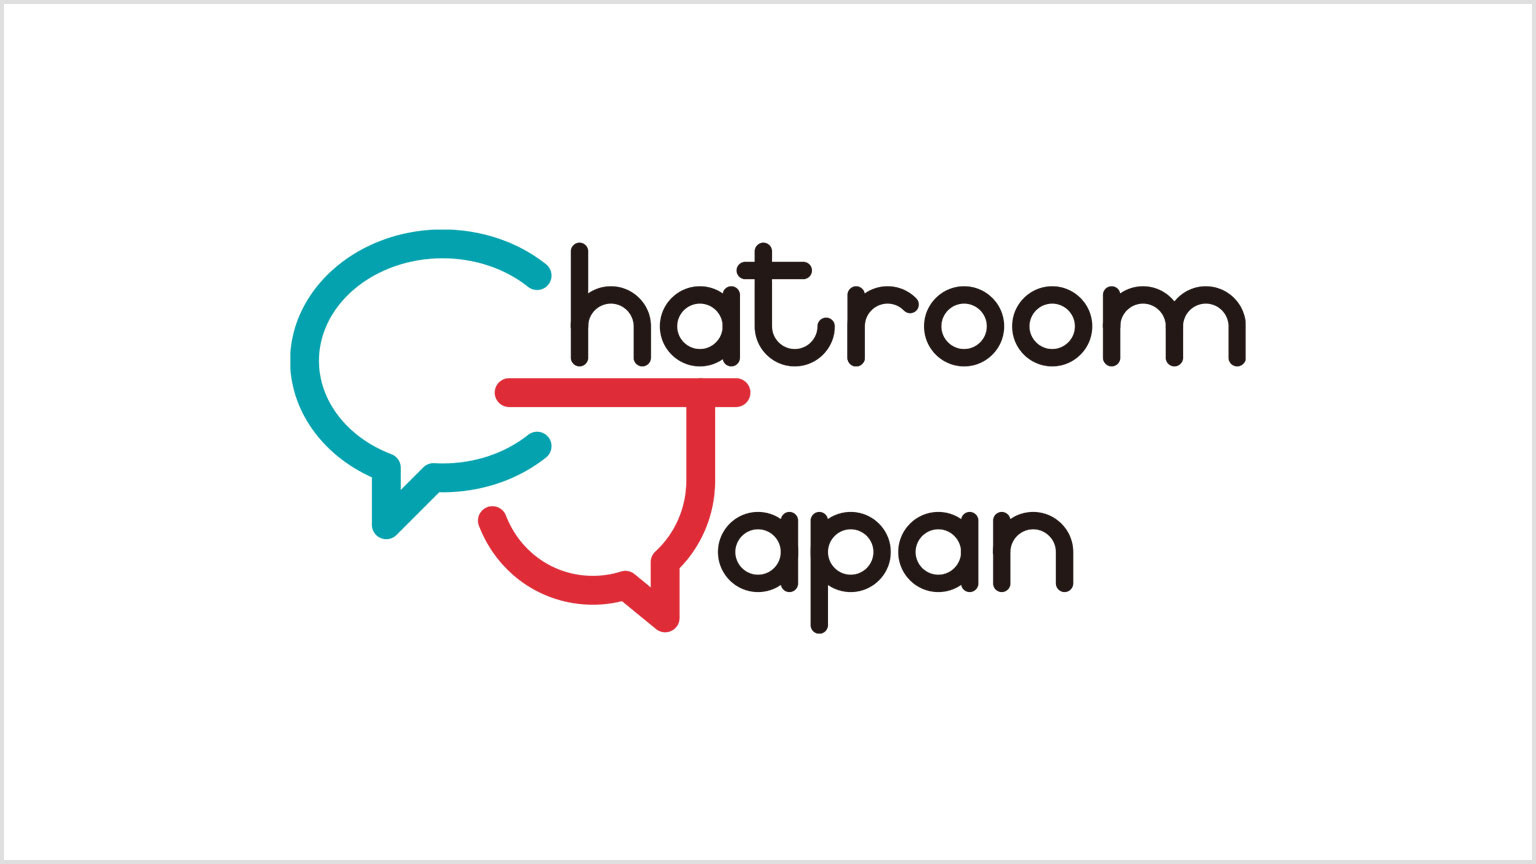 Chatroom Japan